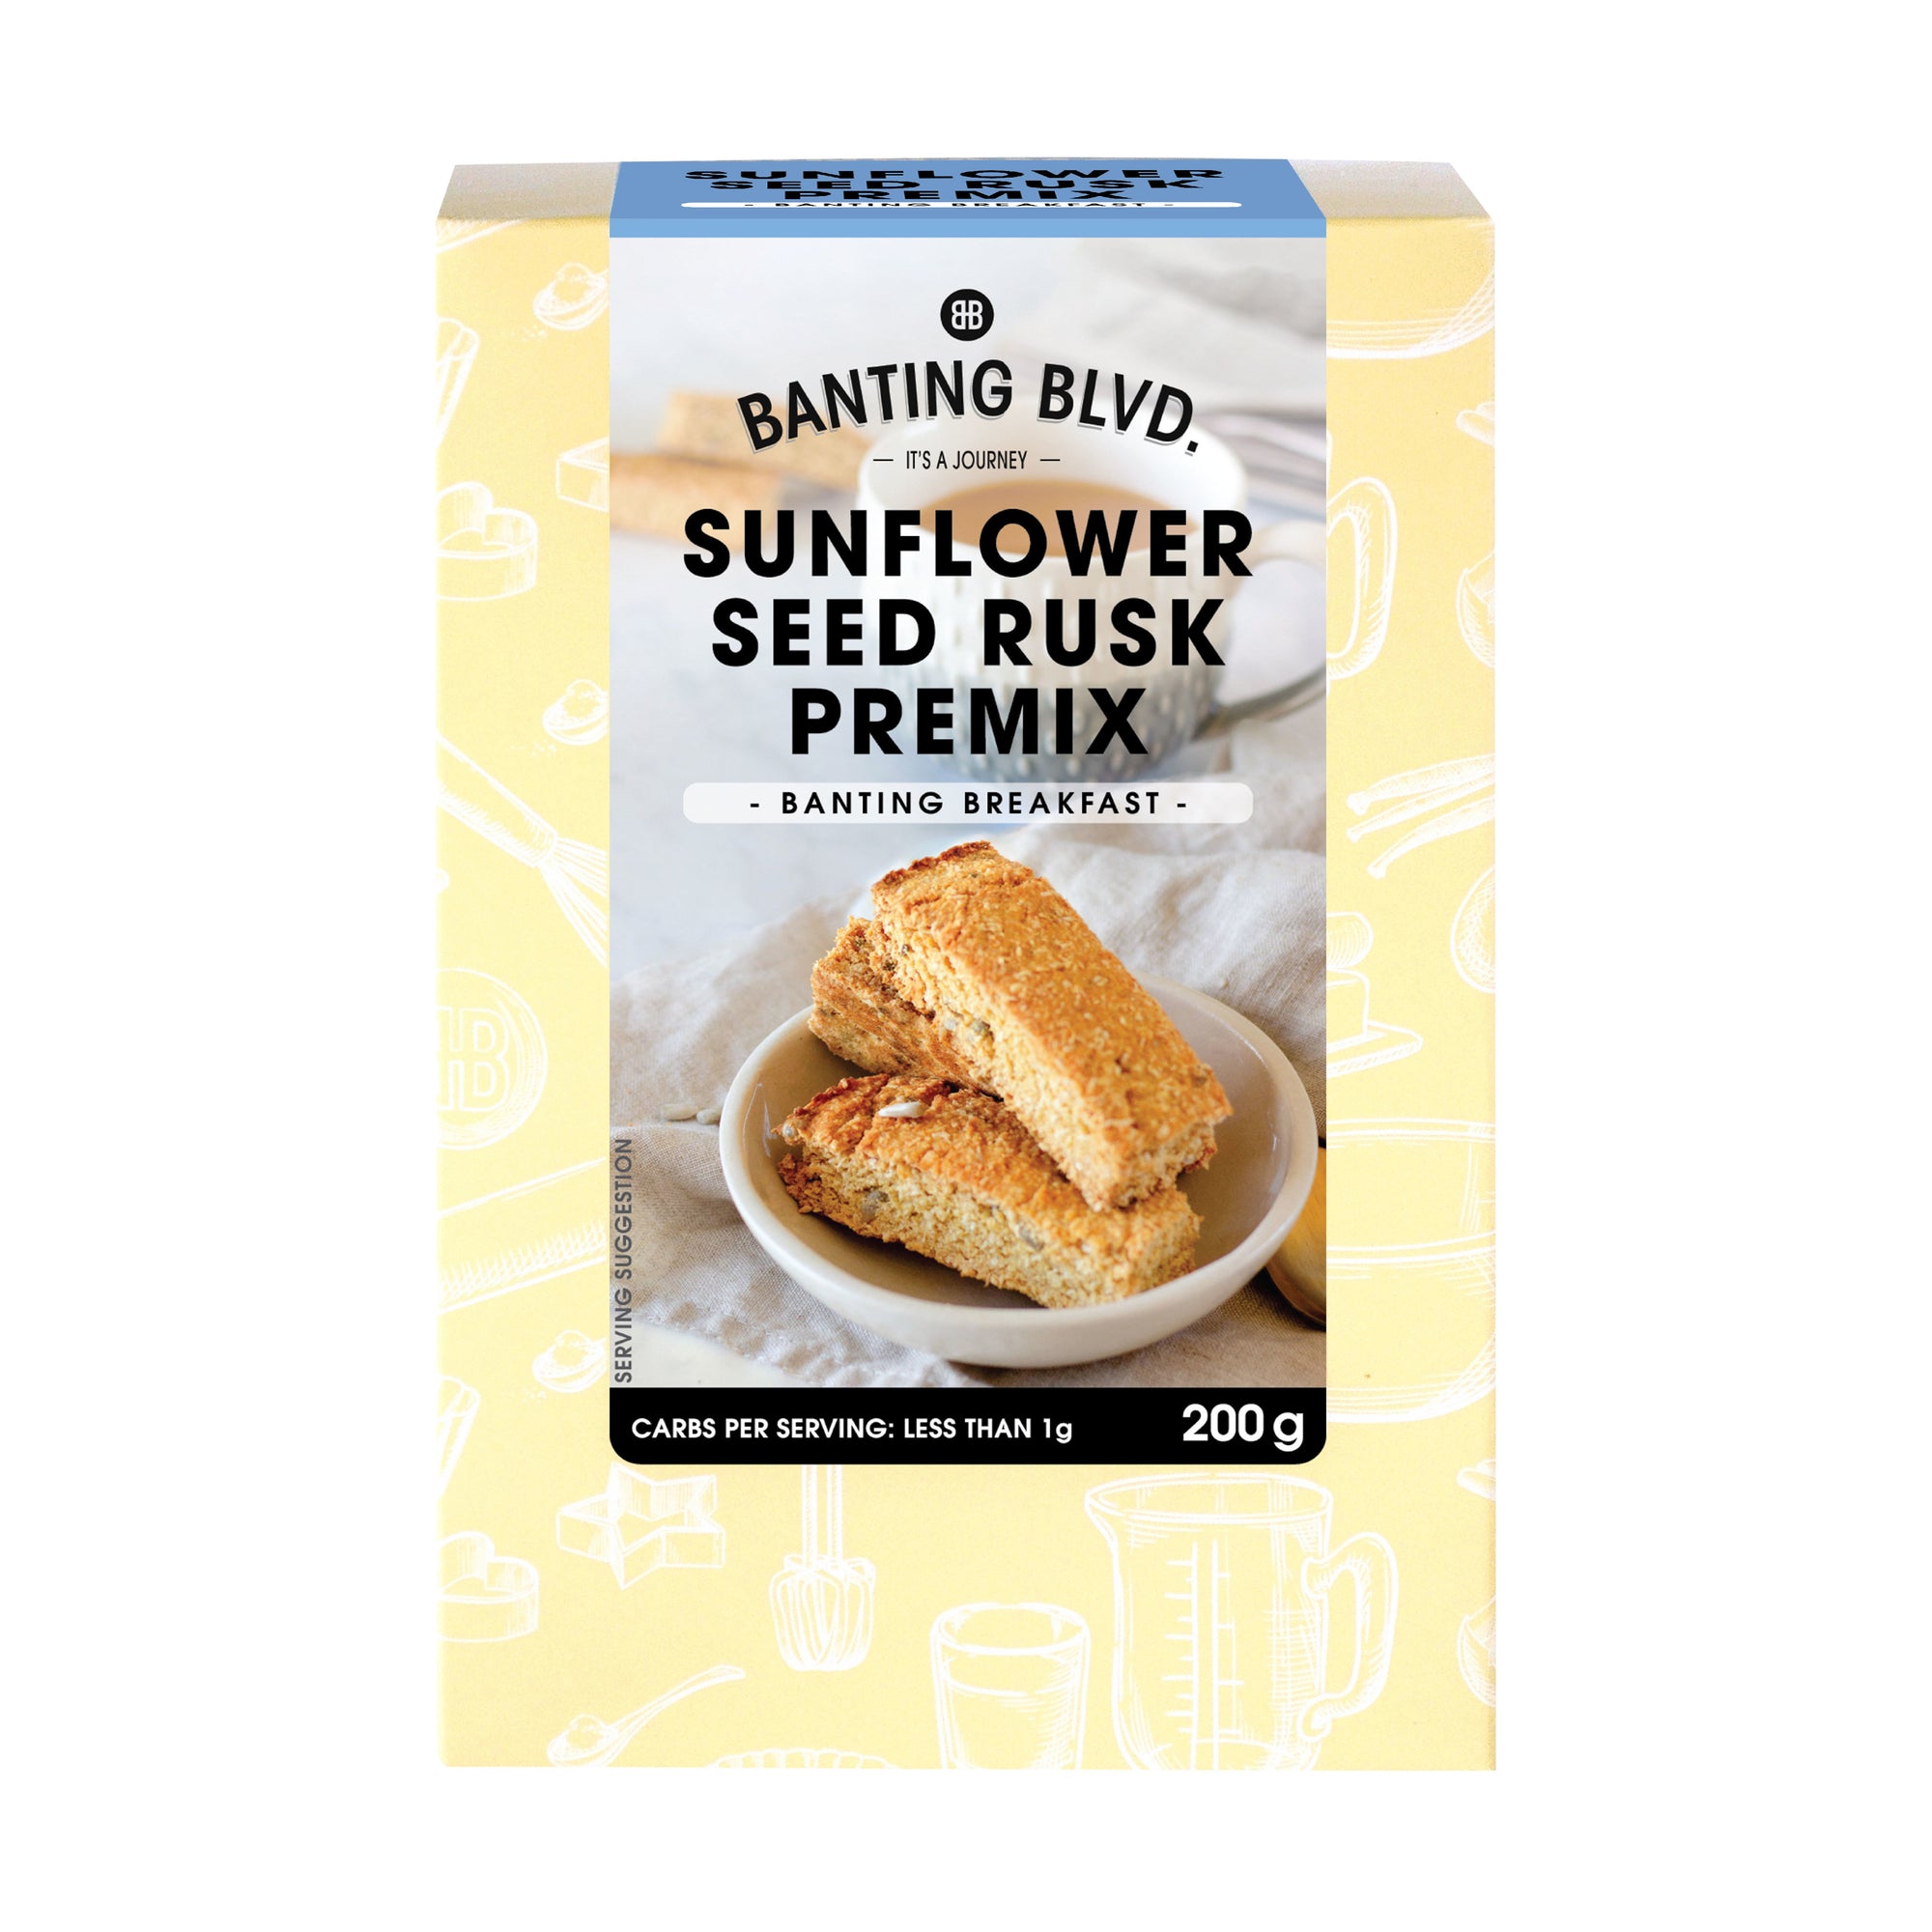 Sunflower Seed Rusk Premix